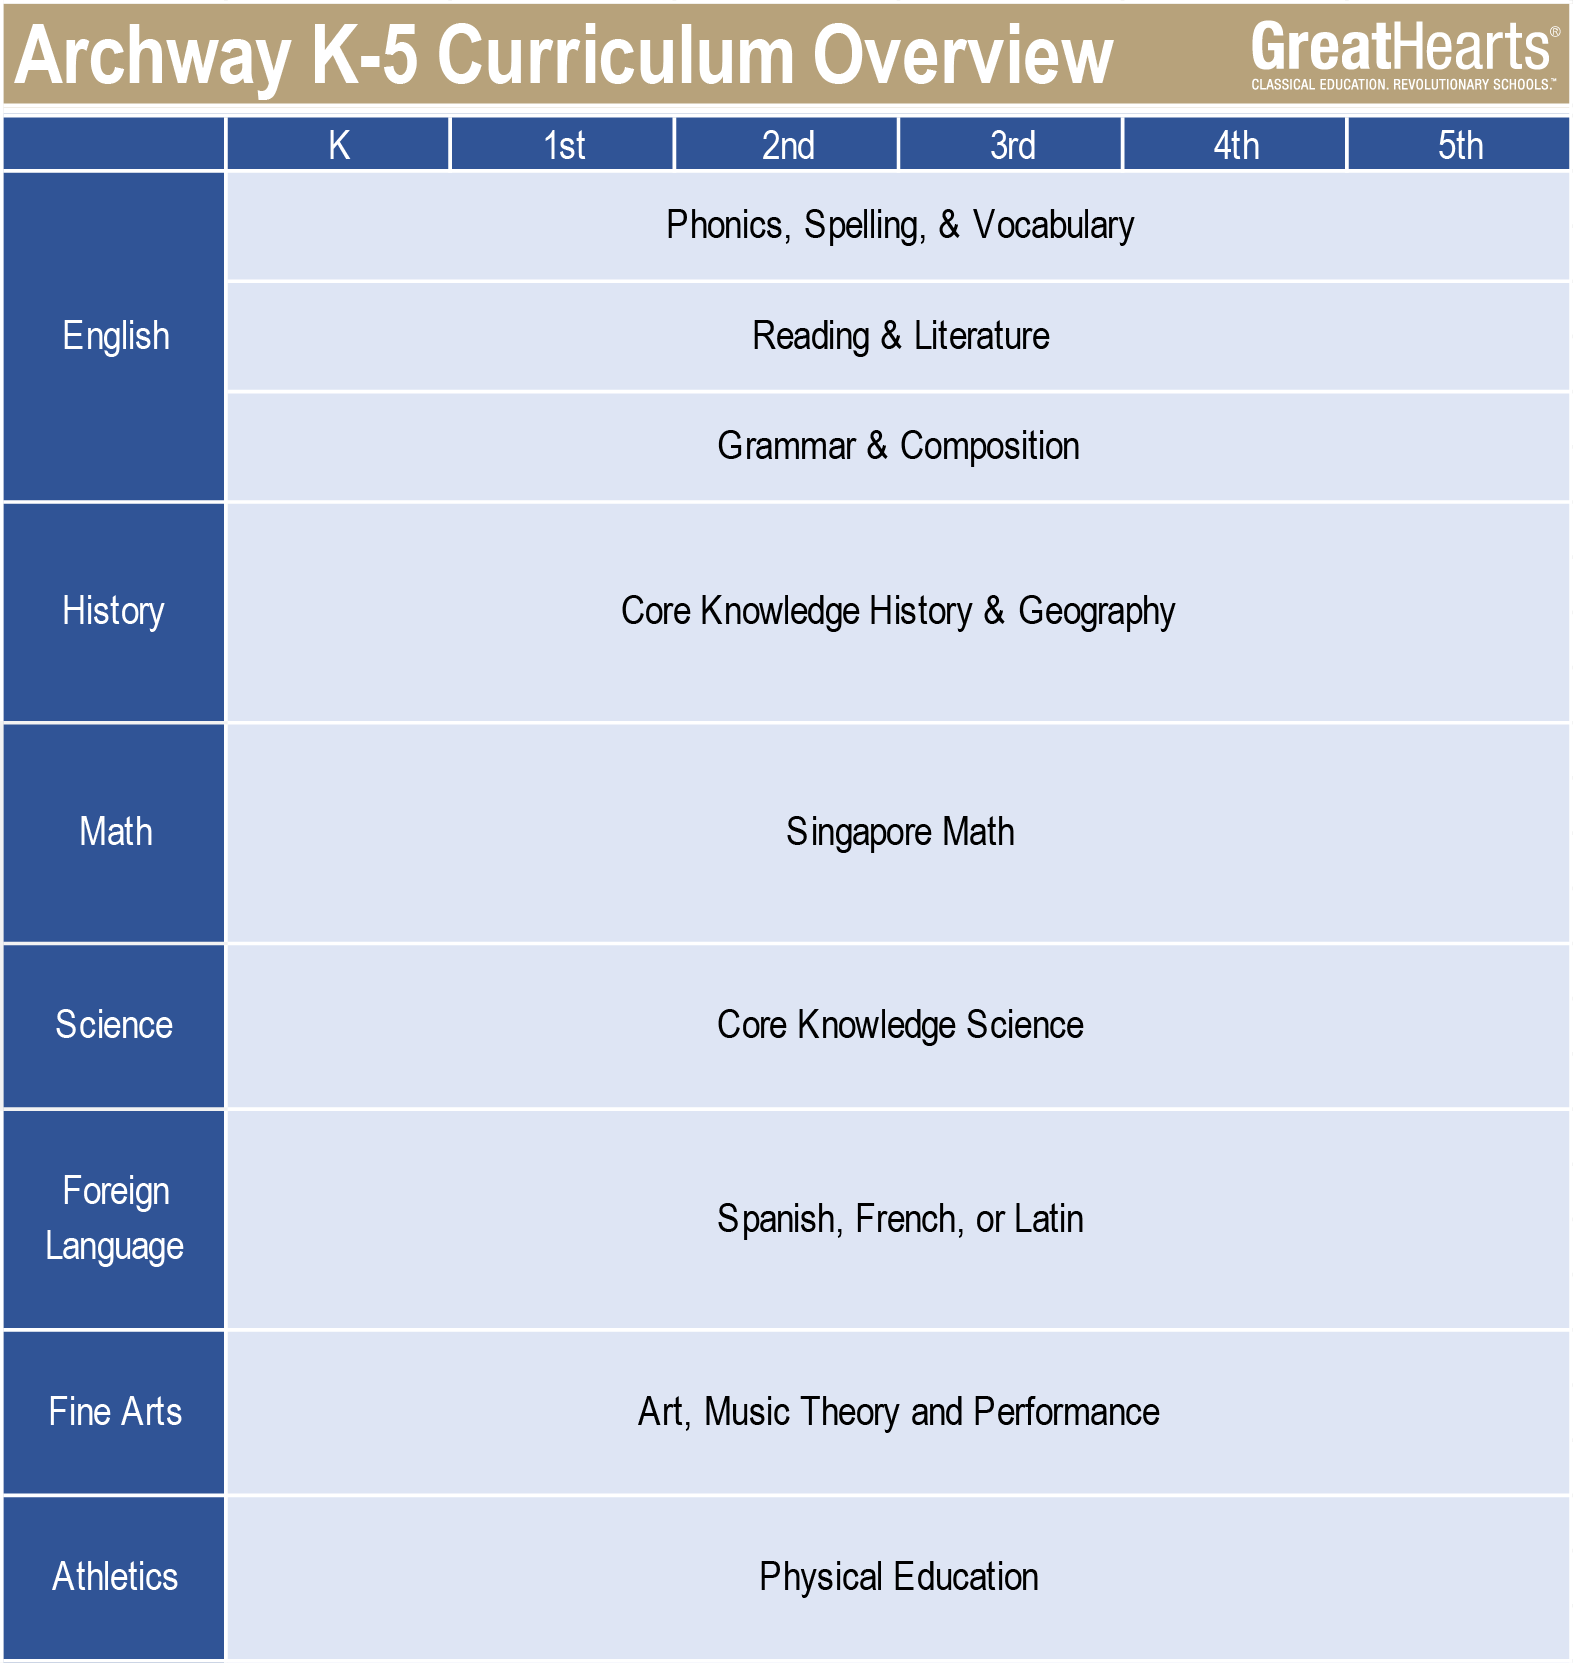 archway k-5 curriculum